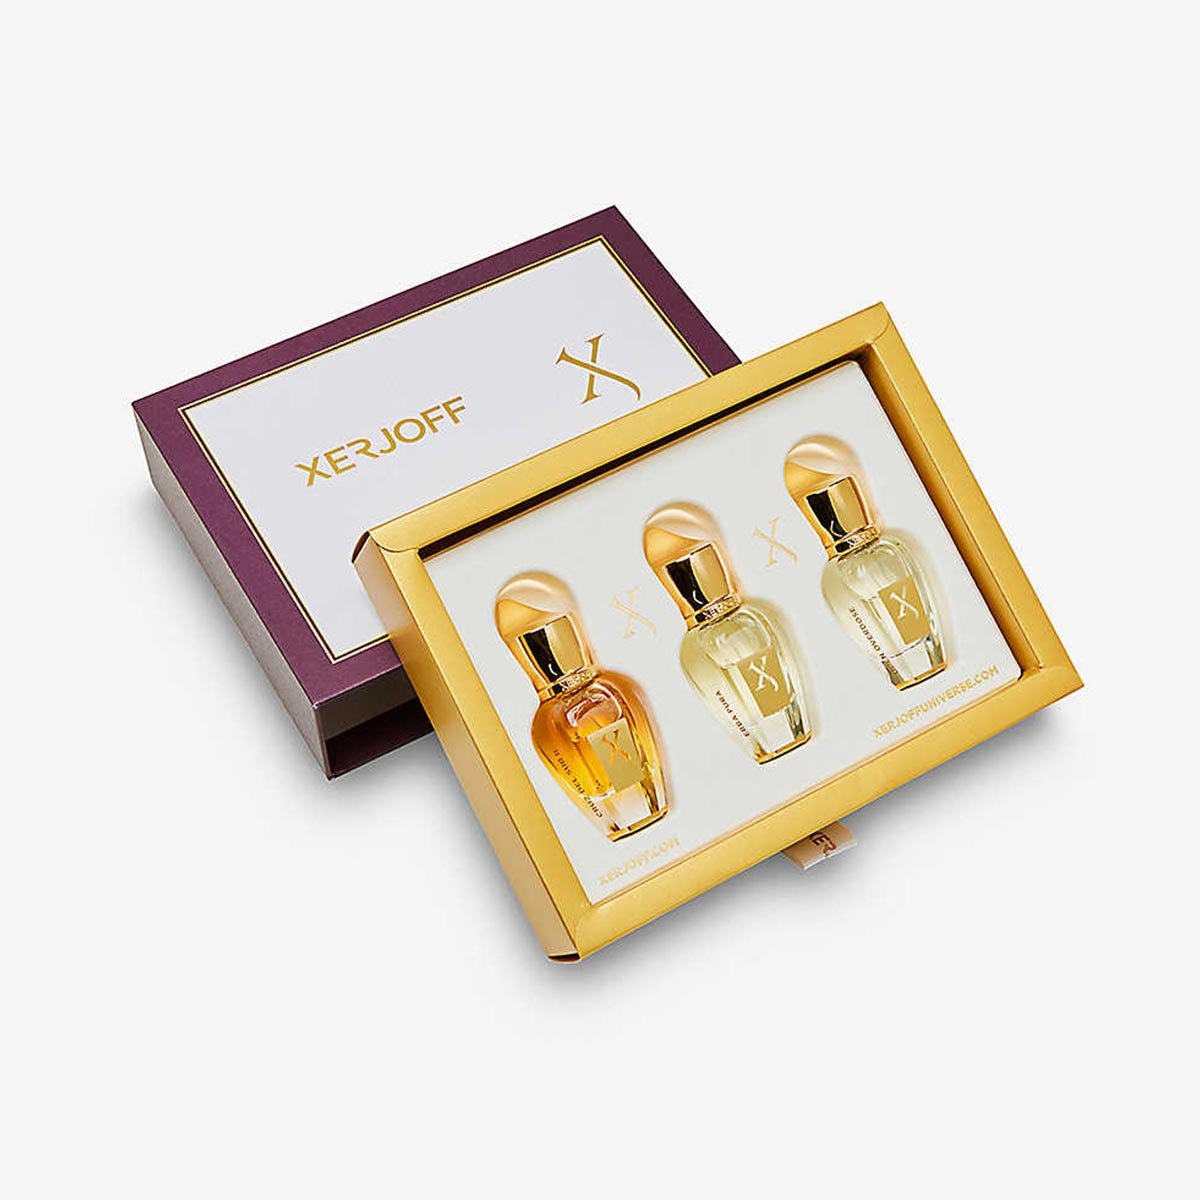 Xerjoff Discovery Set I | My Perfume Shop Australia